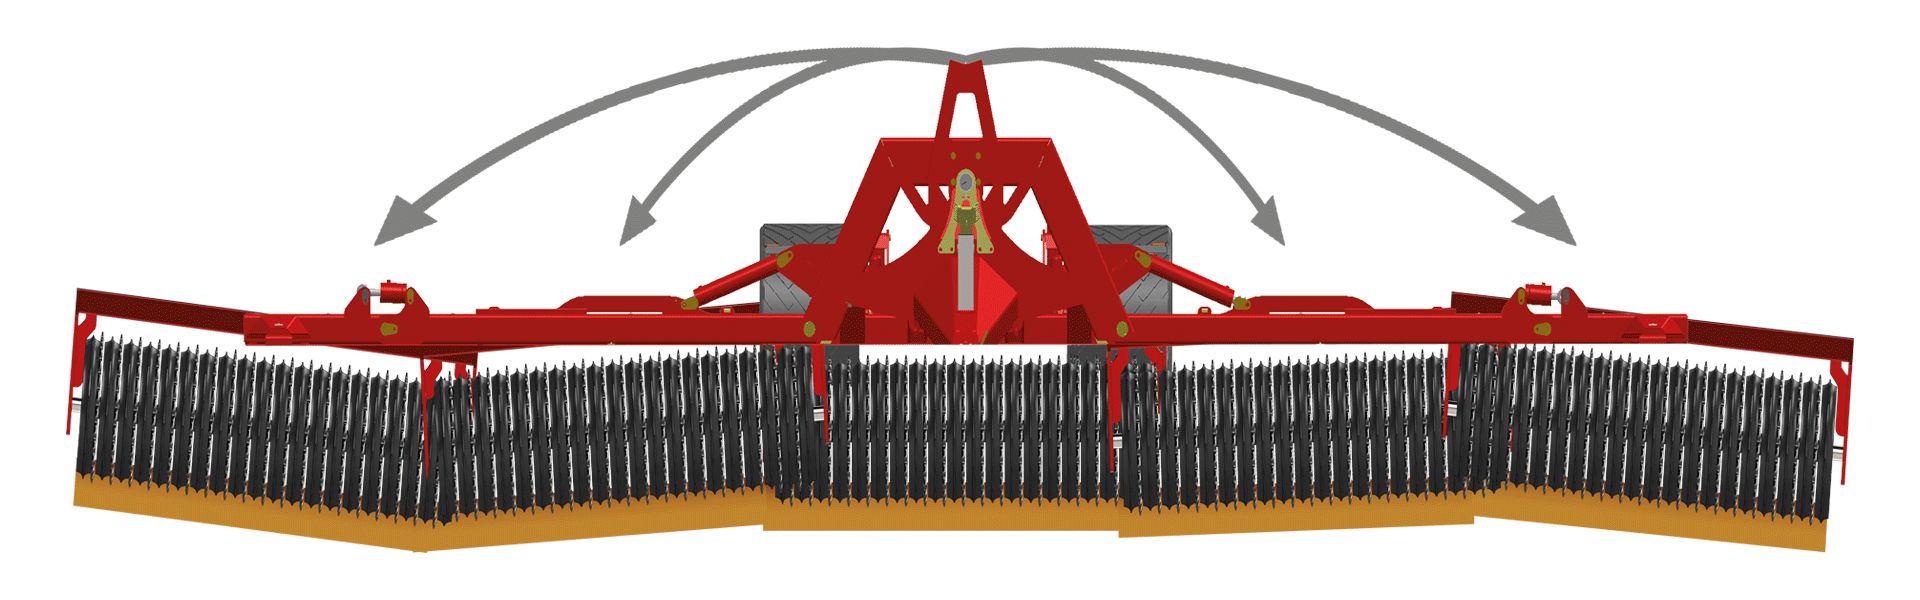 Tip-roller xl rouleau agricole - he-va -12,30 - 15,30 m_0